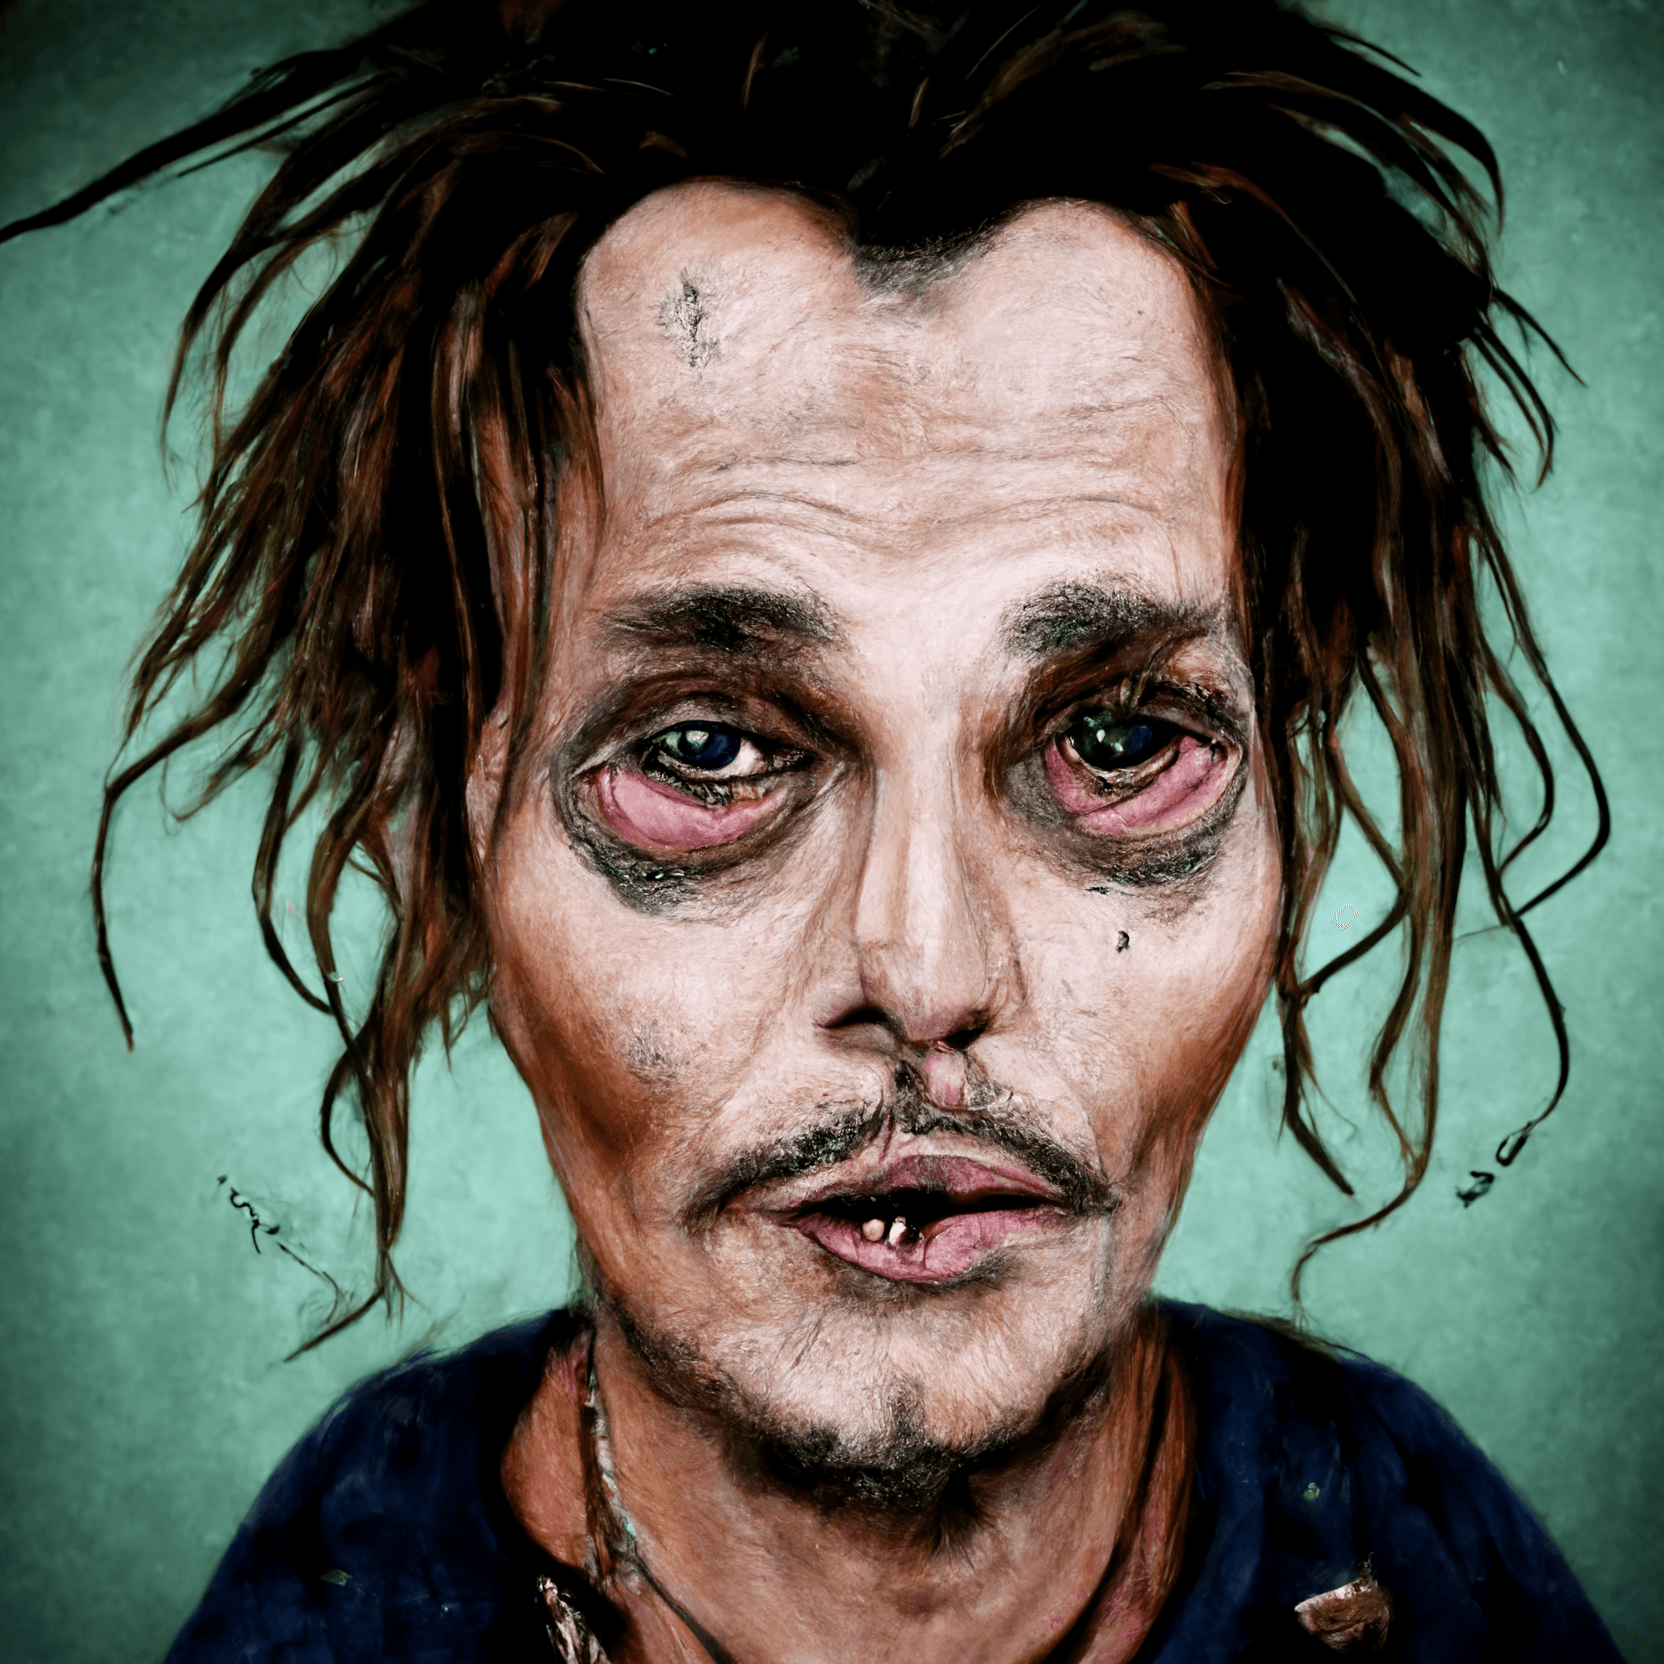 Johnny Depp on Crack v3 